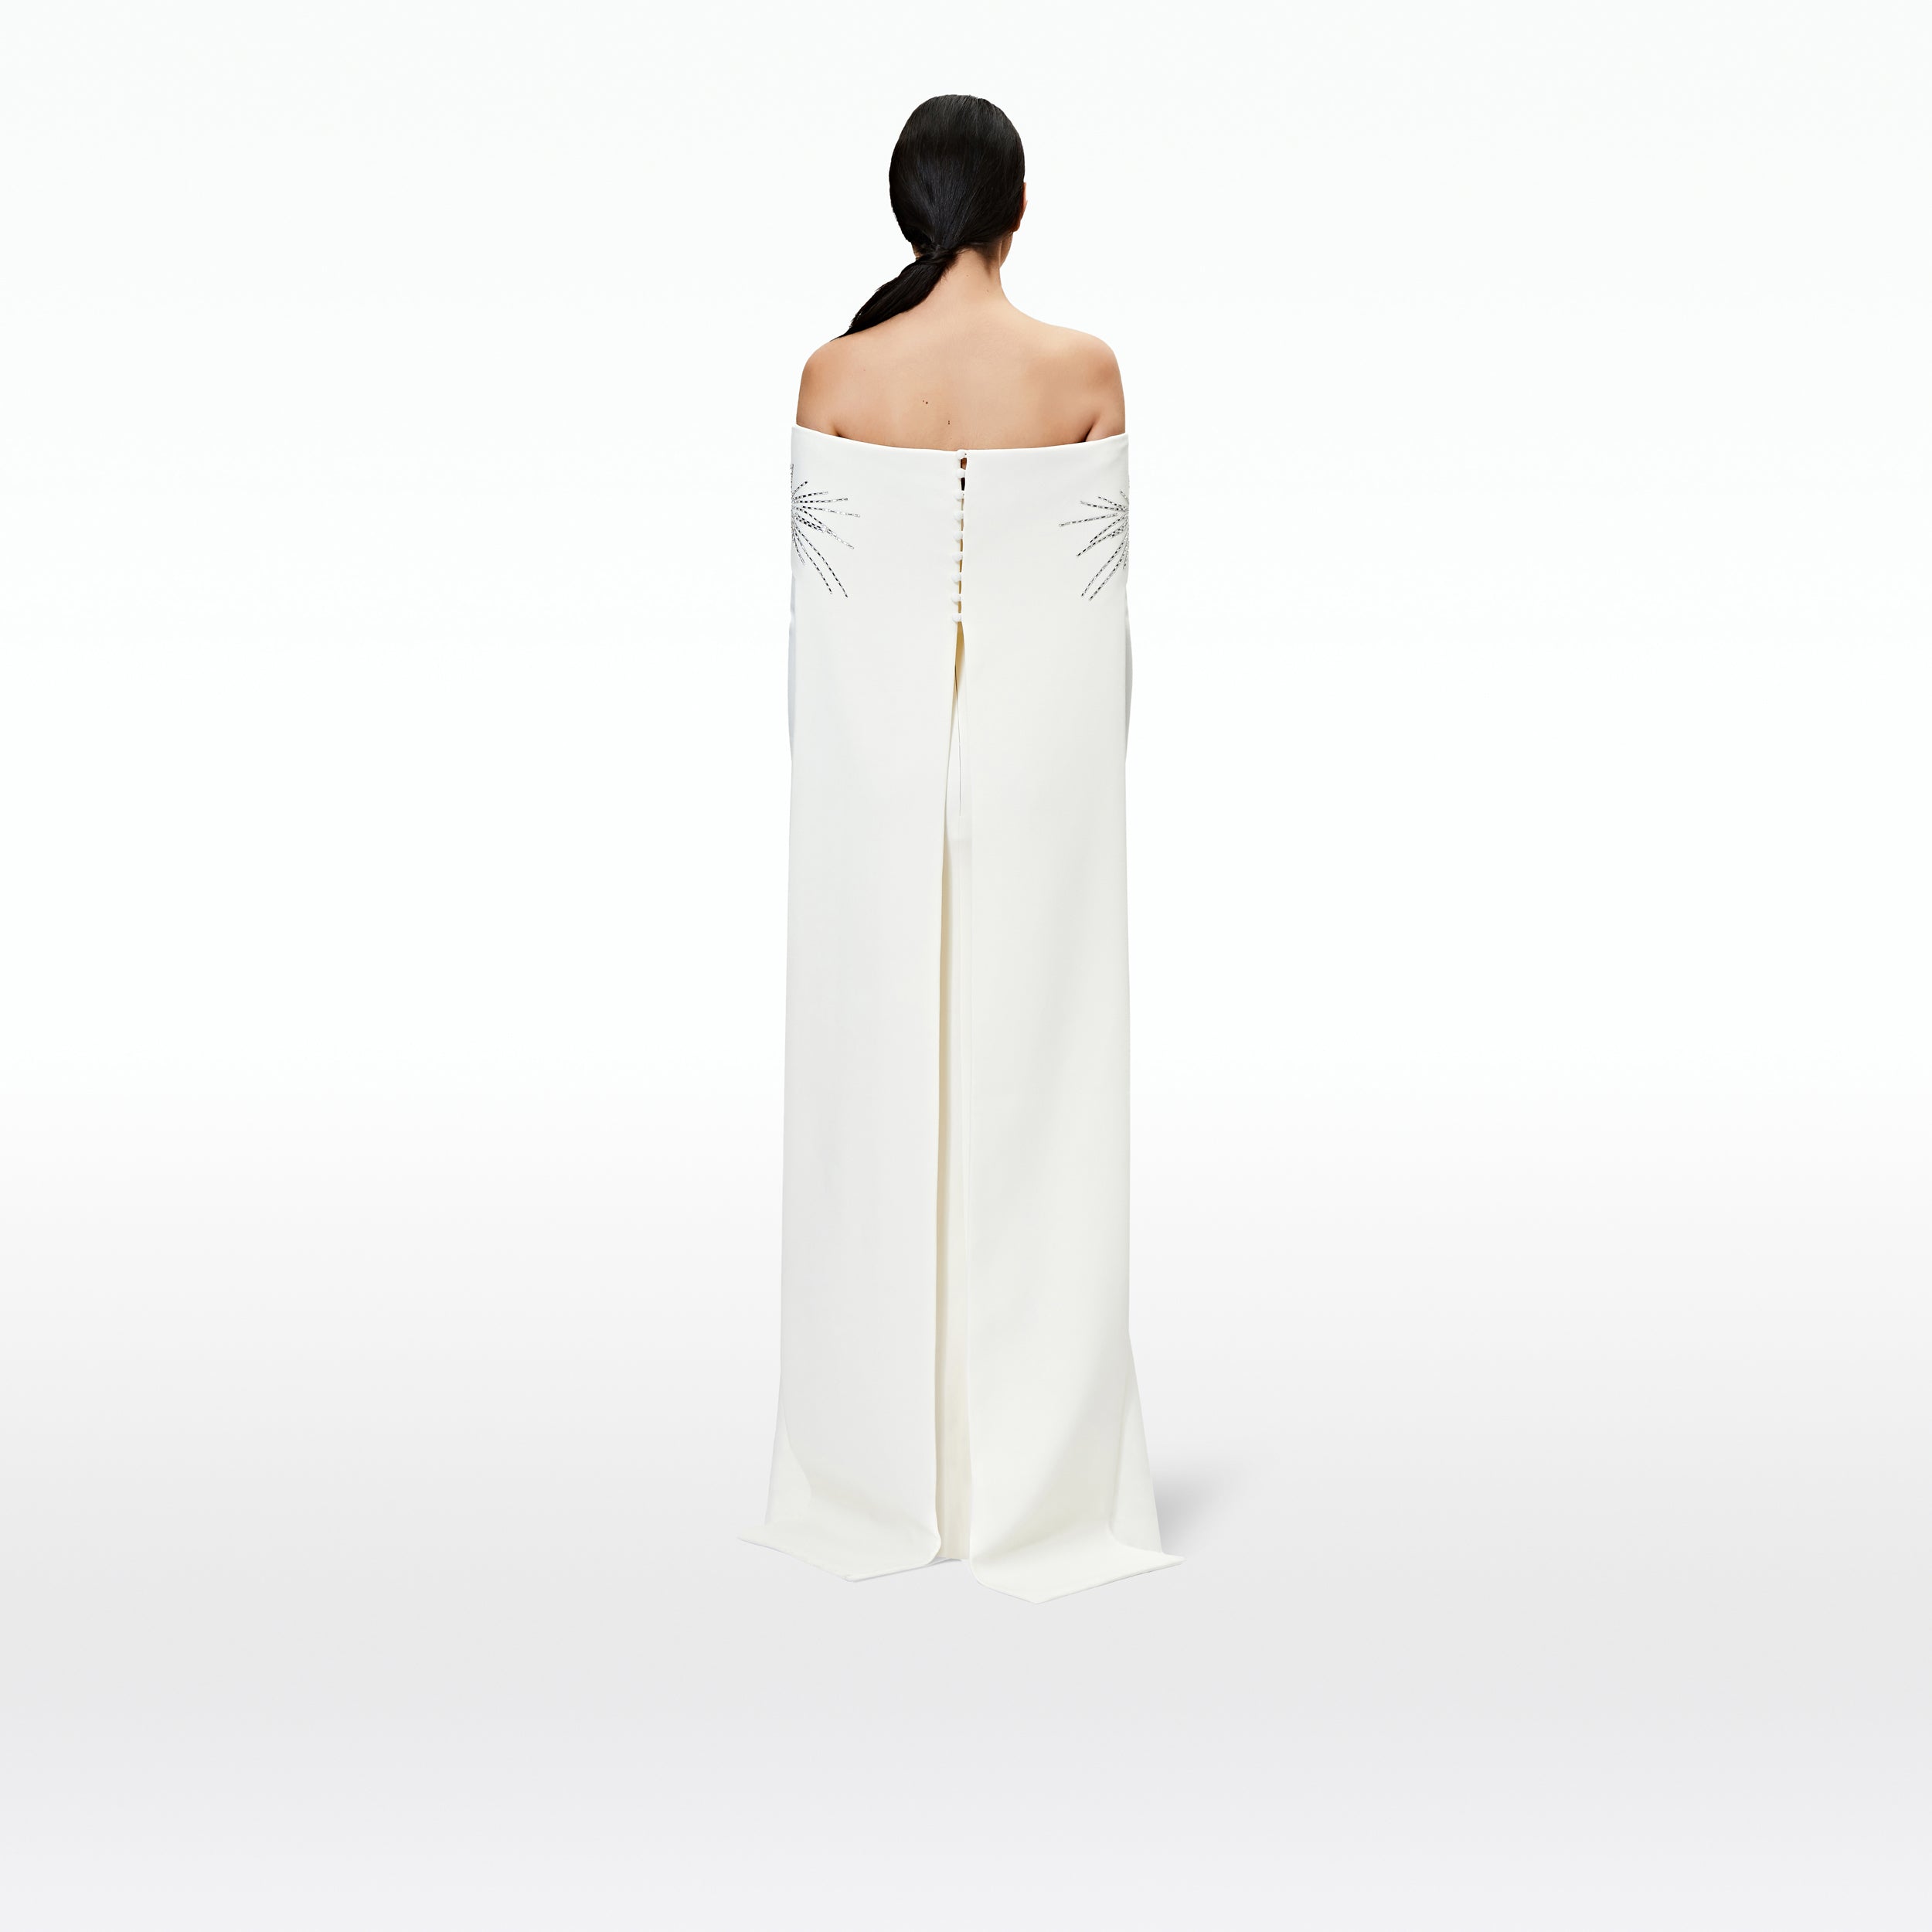 Bellara Ivory Long Dress With Harness